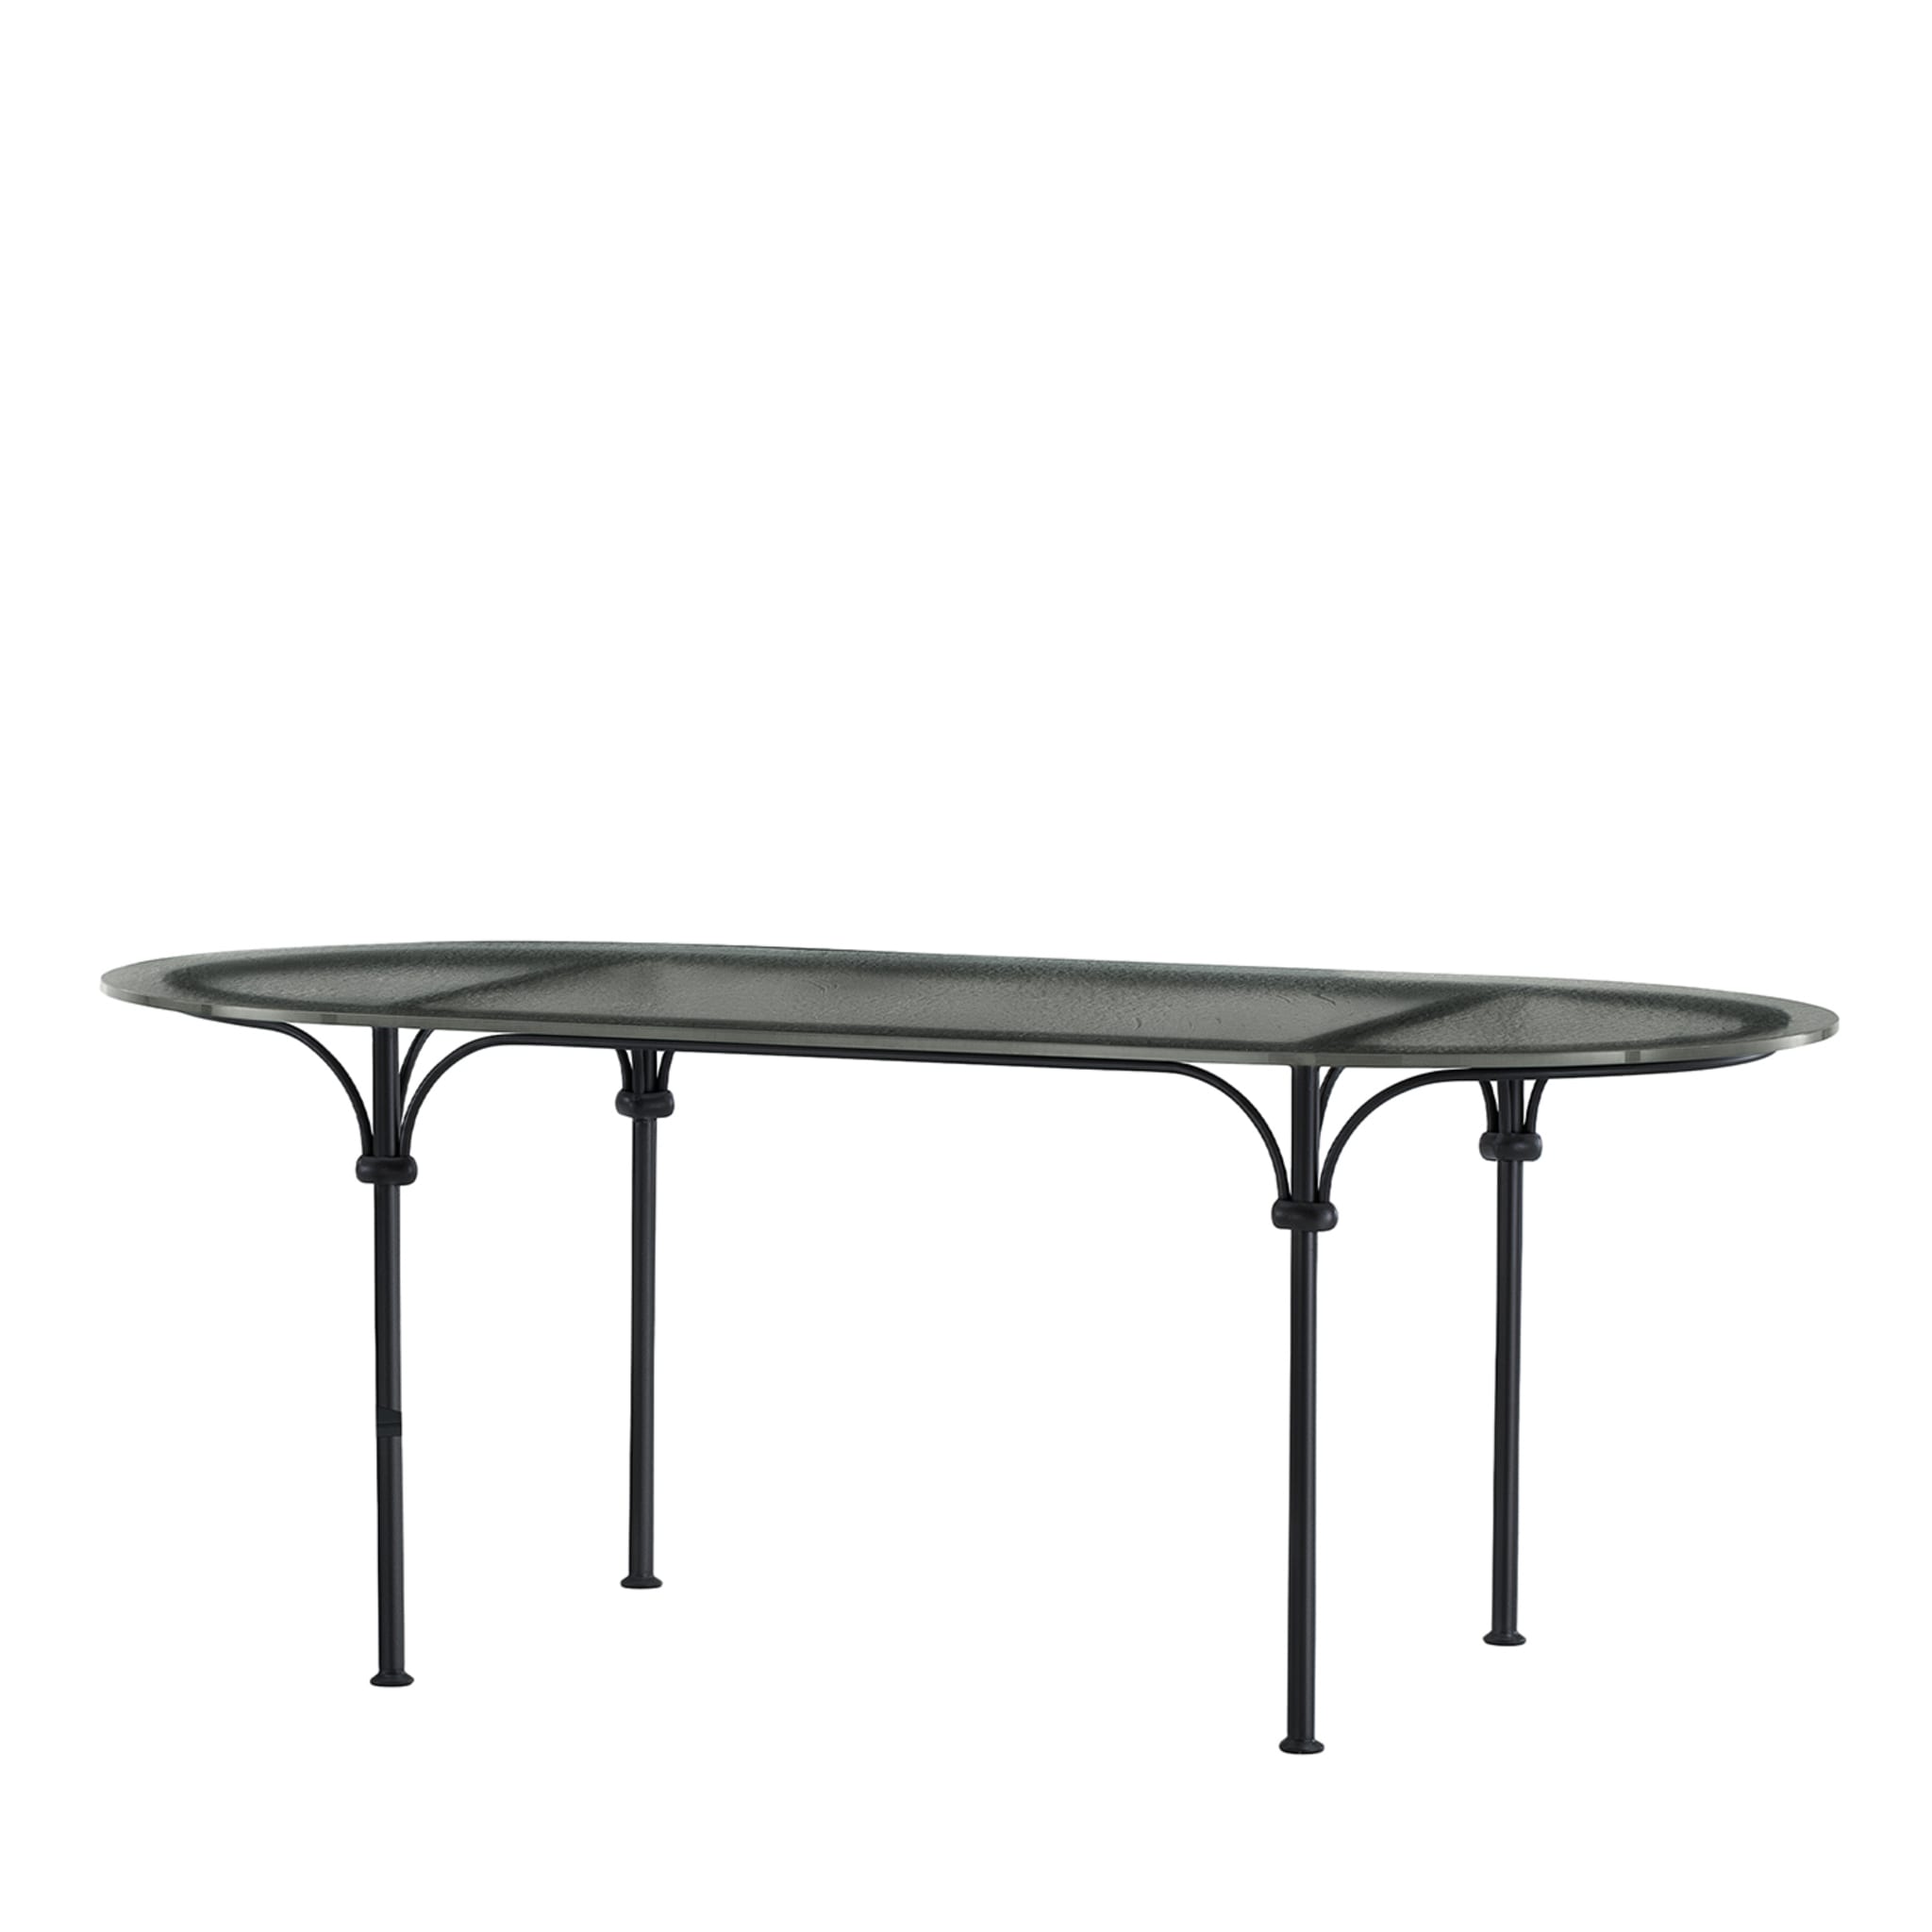 Tavolario Glass & Wrought Iron Oval Table - Main view